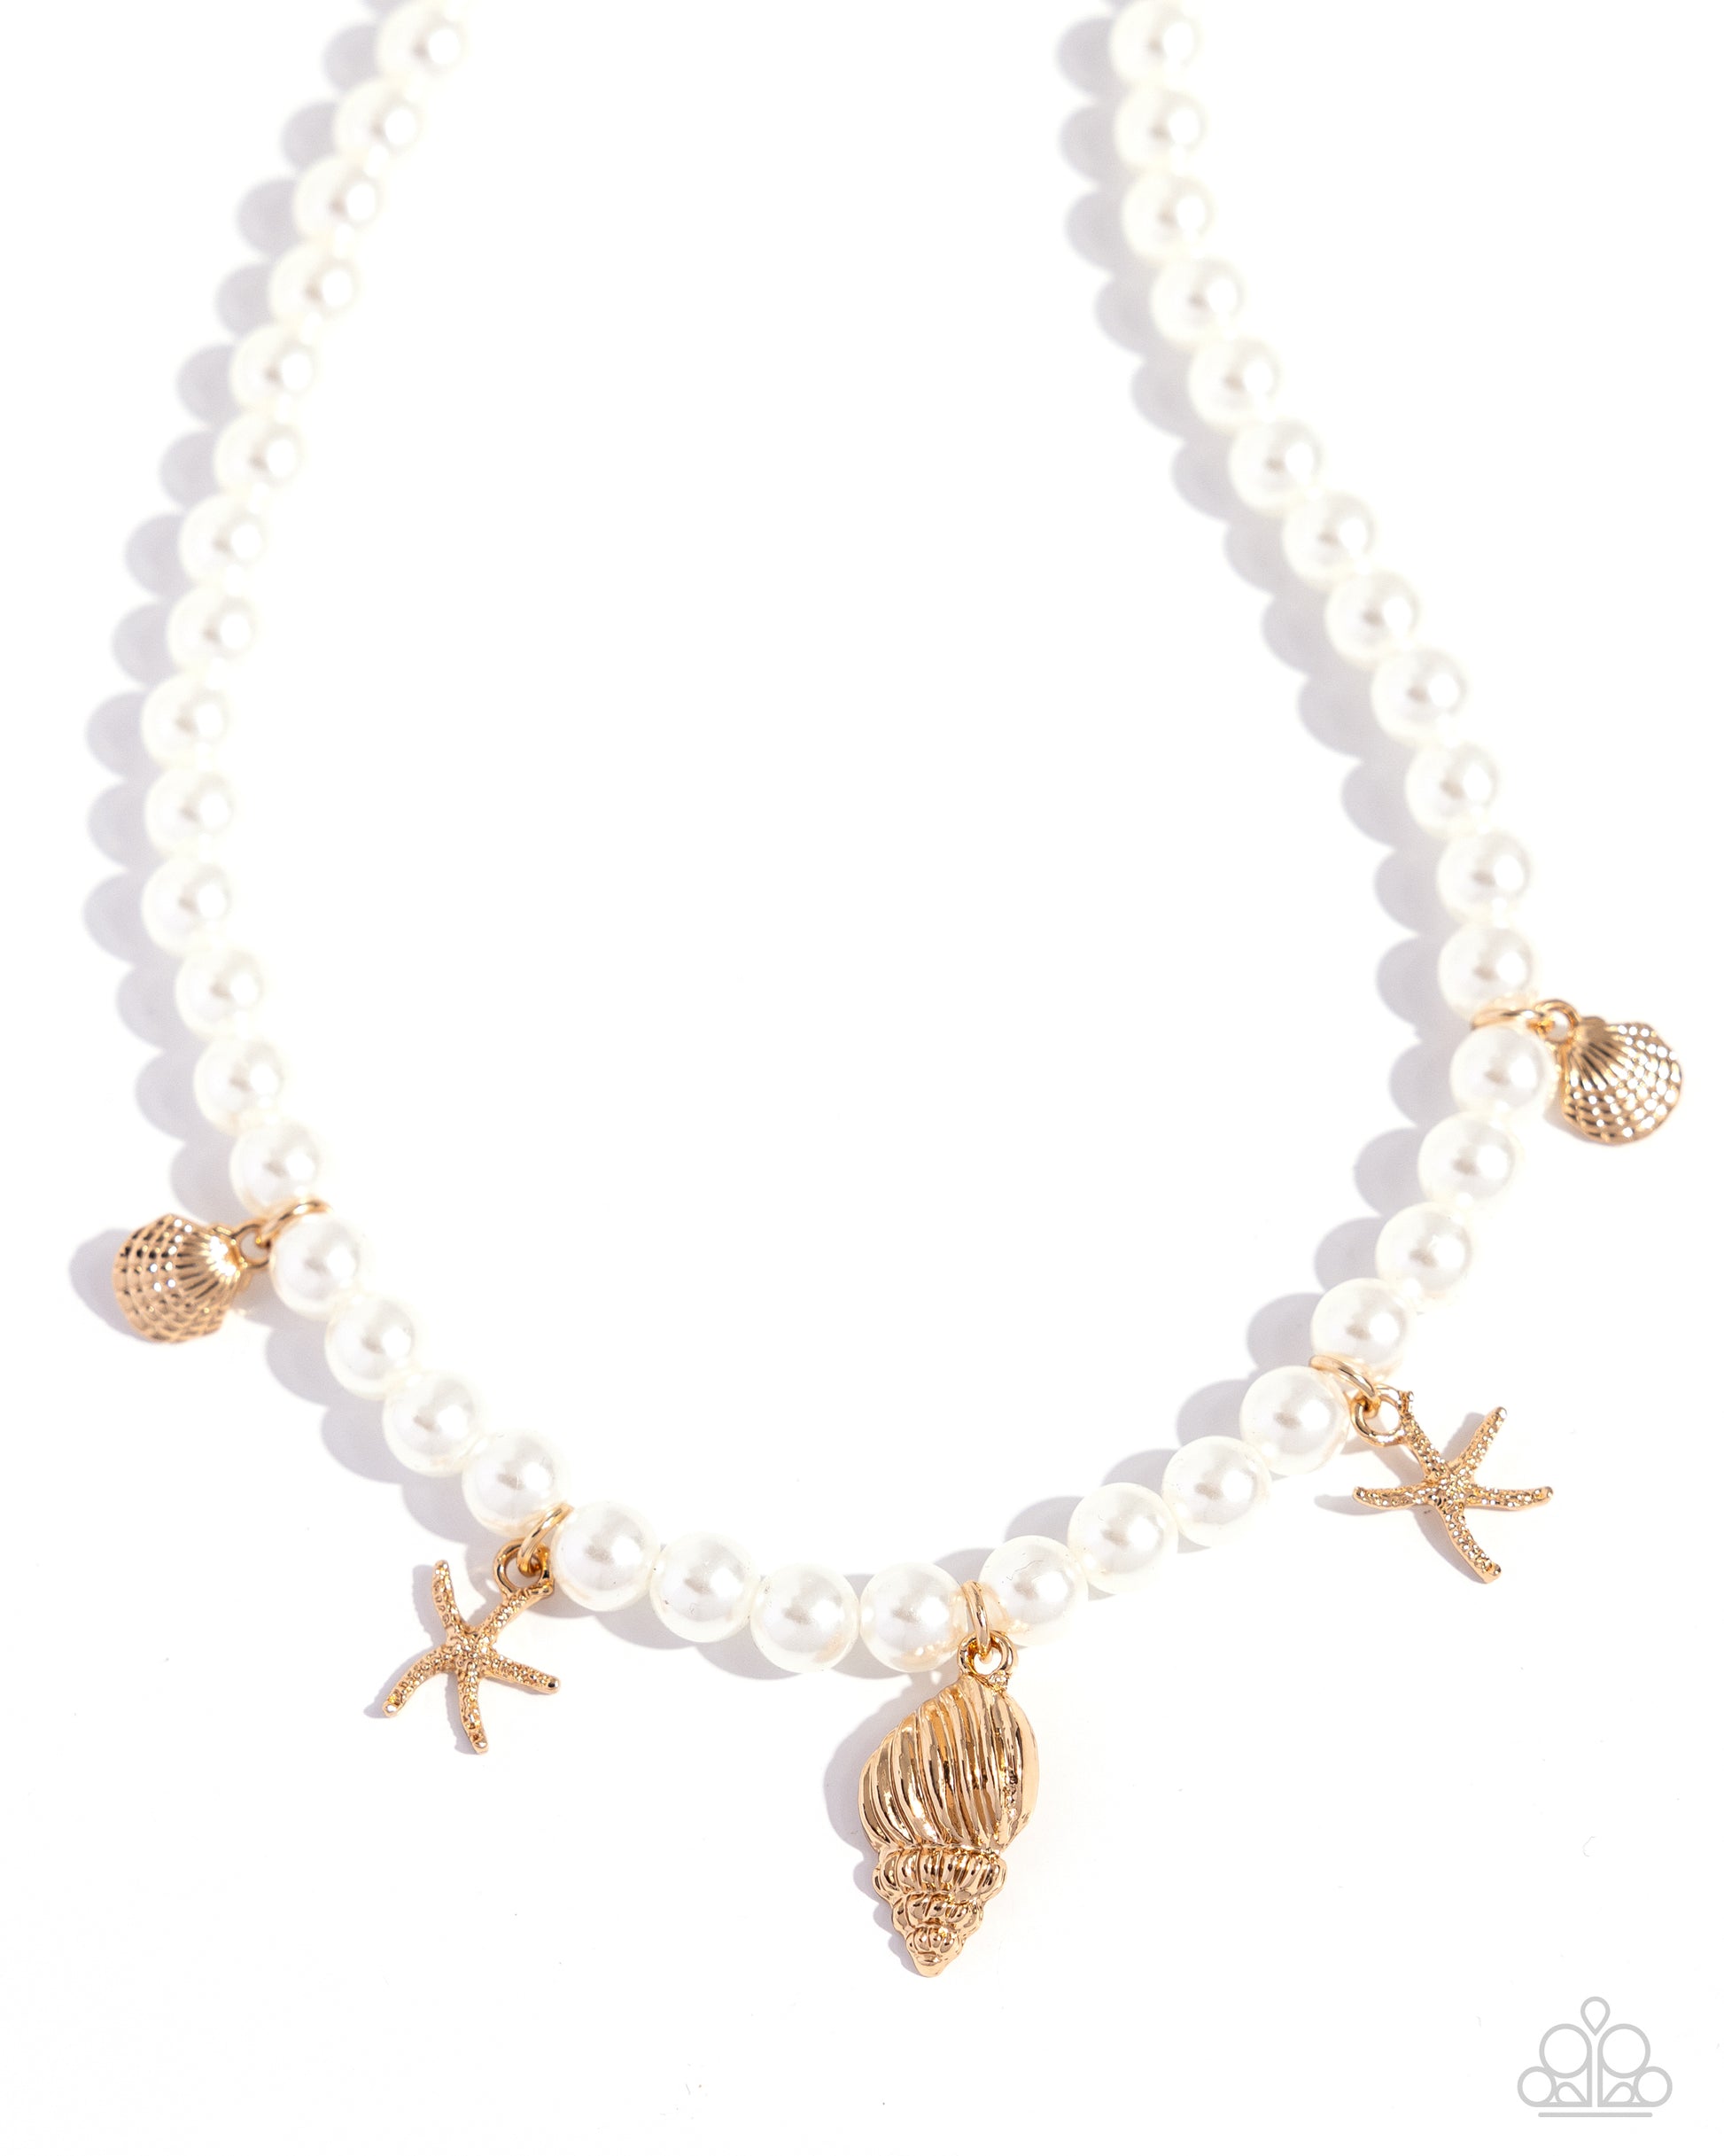 Beachcomber Beauty - gold - Paparazzi necklace